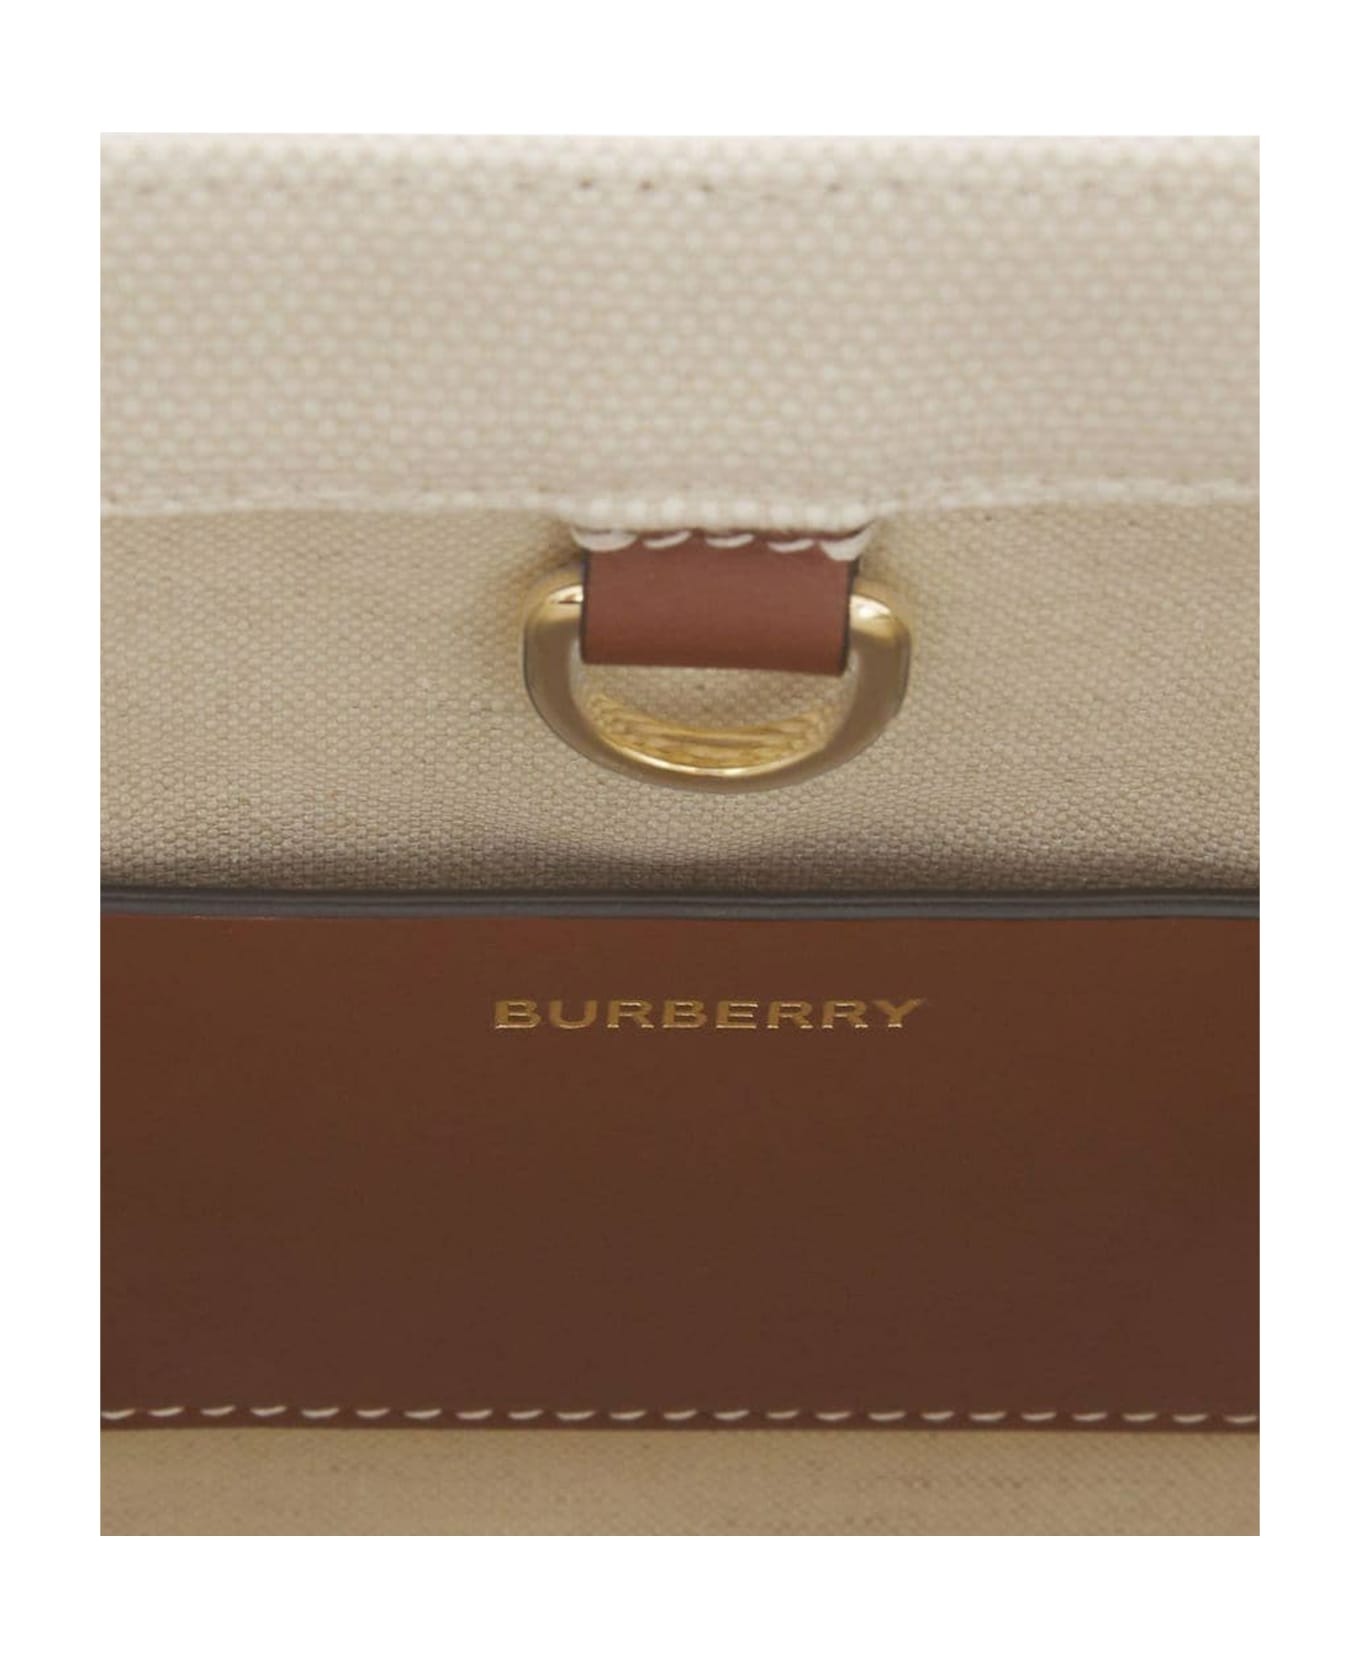 Burberry Ll Mn Pocket Dtl Tote Ll6 Womens Bags - Natural Tan